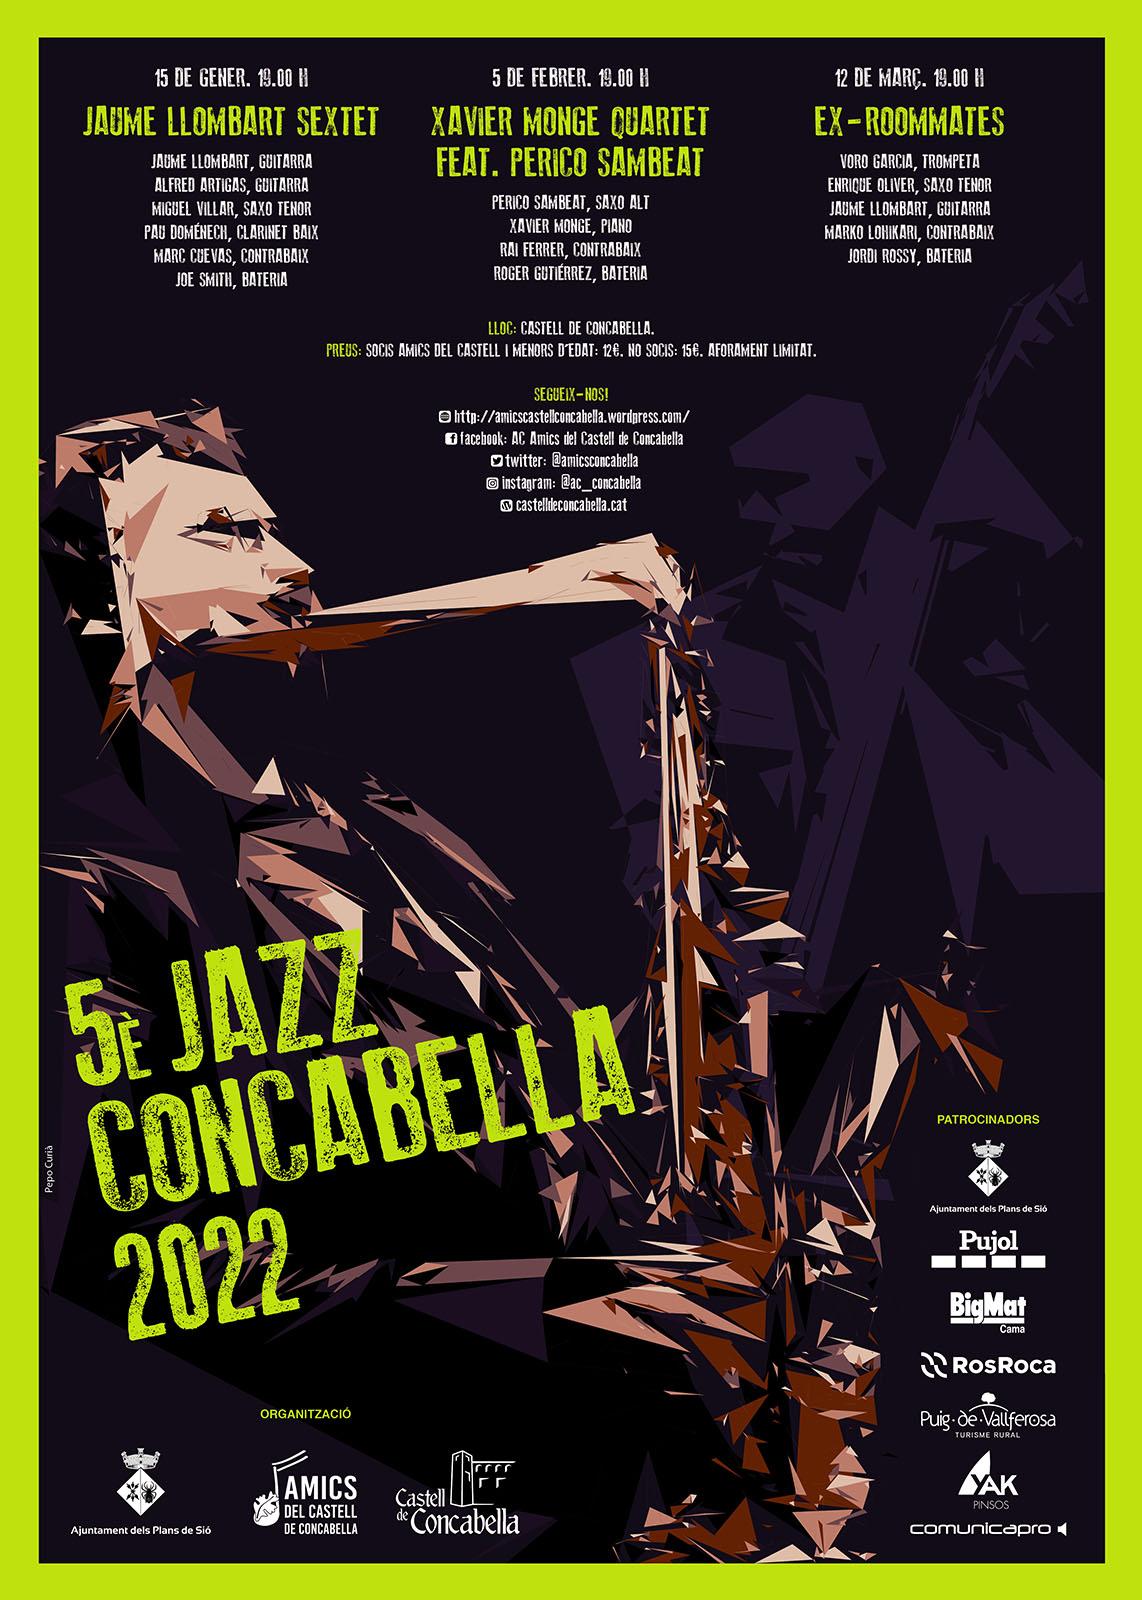 cartell V JazzConcabella 2022